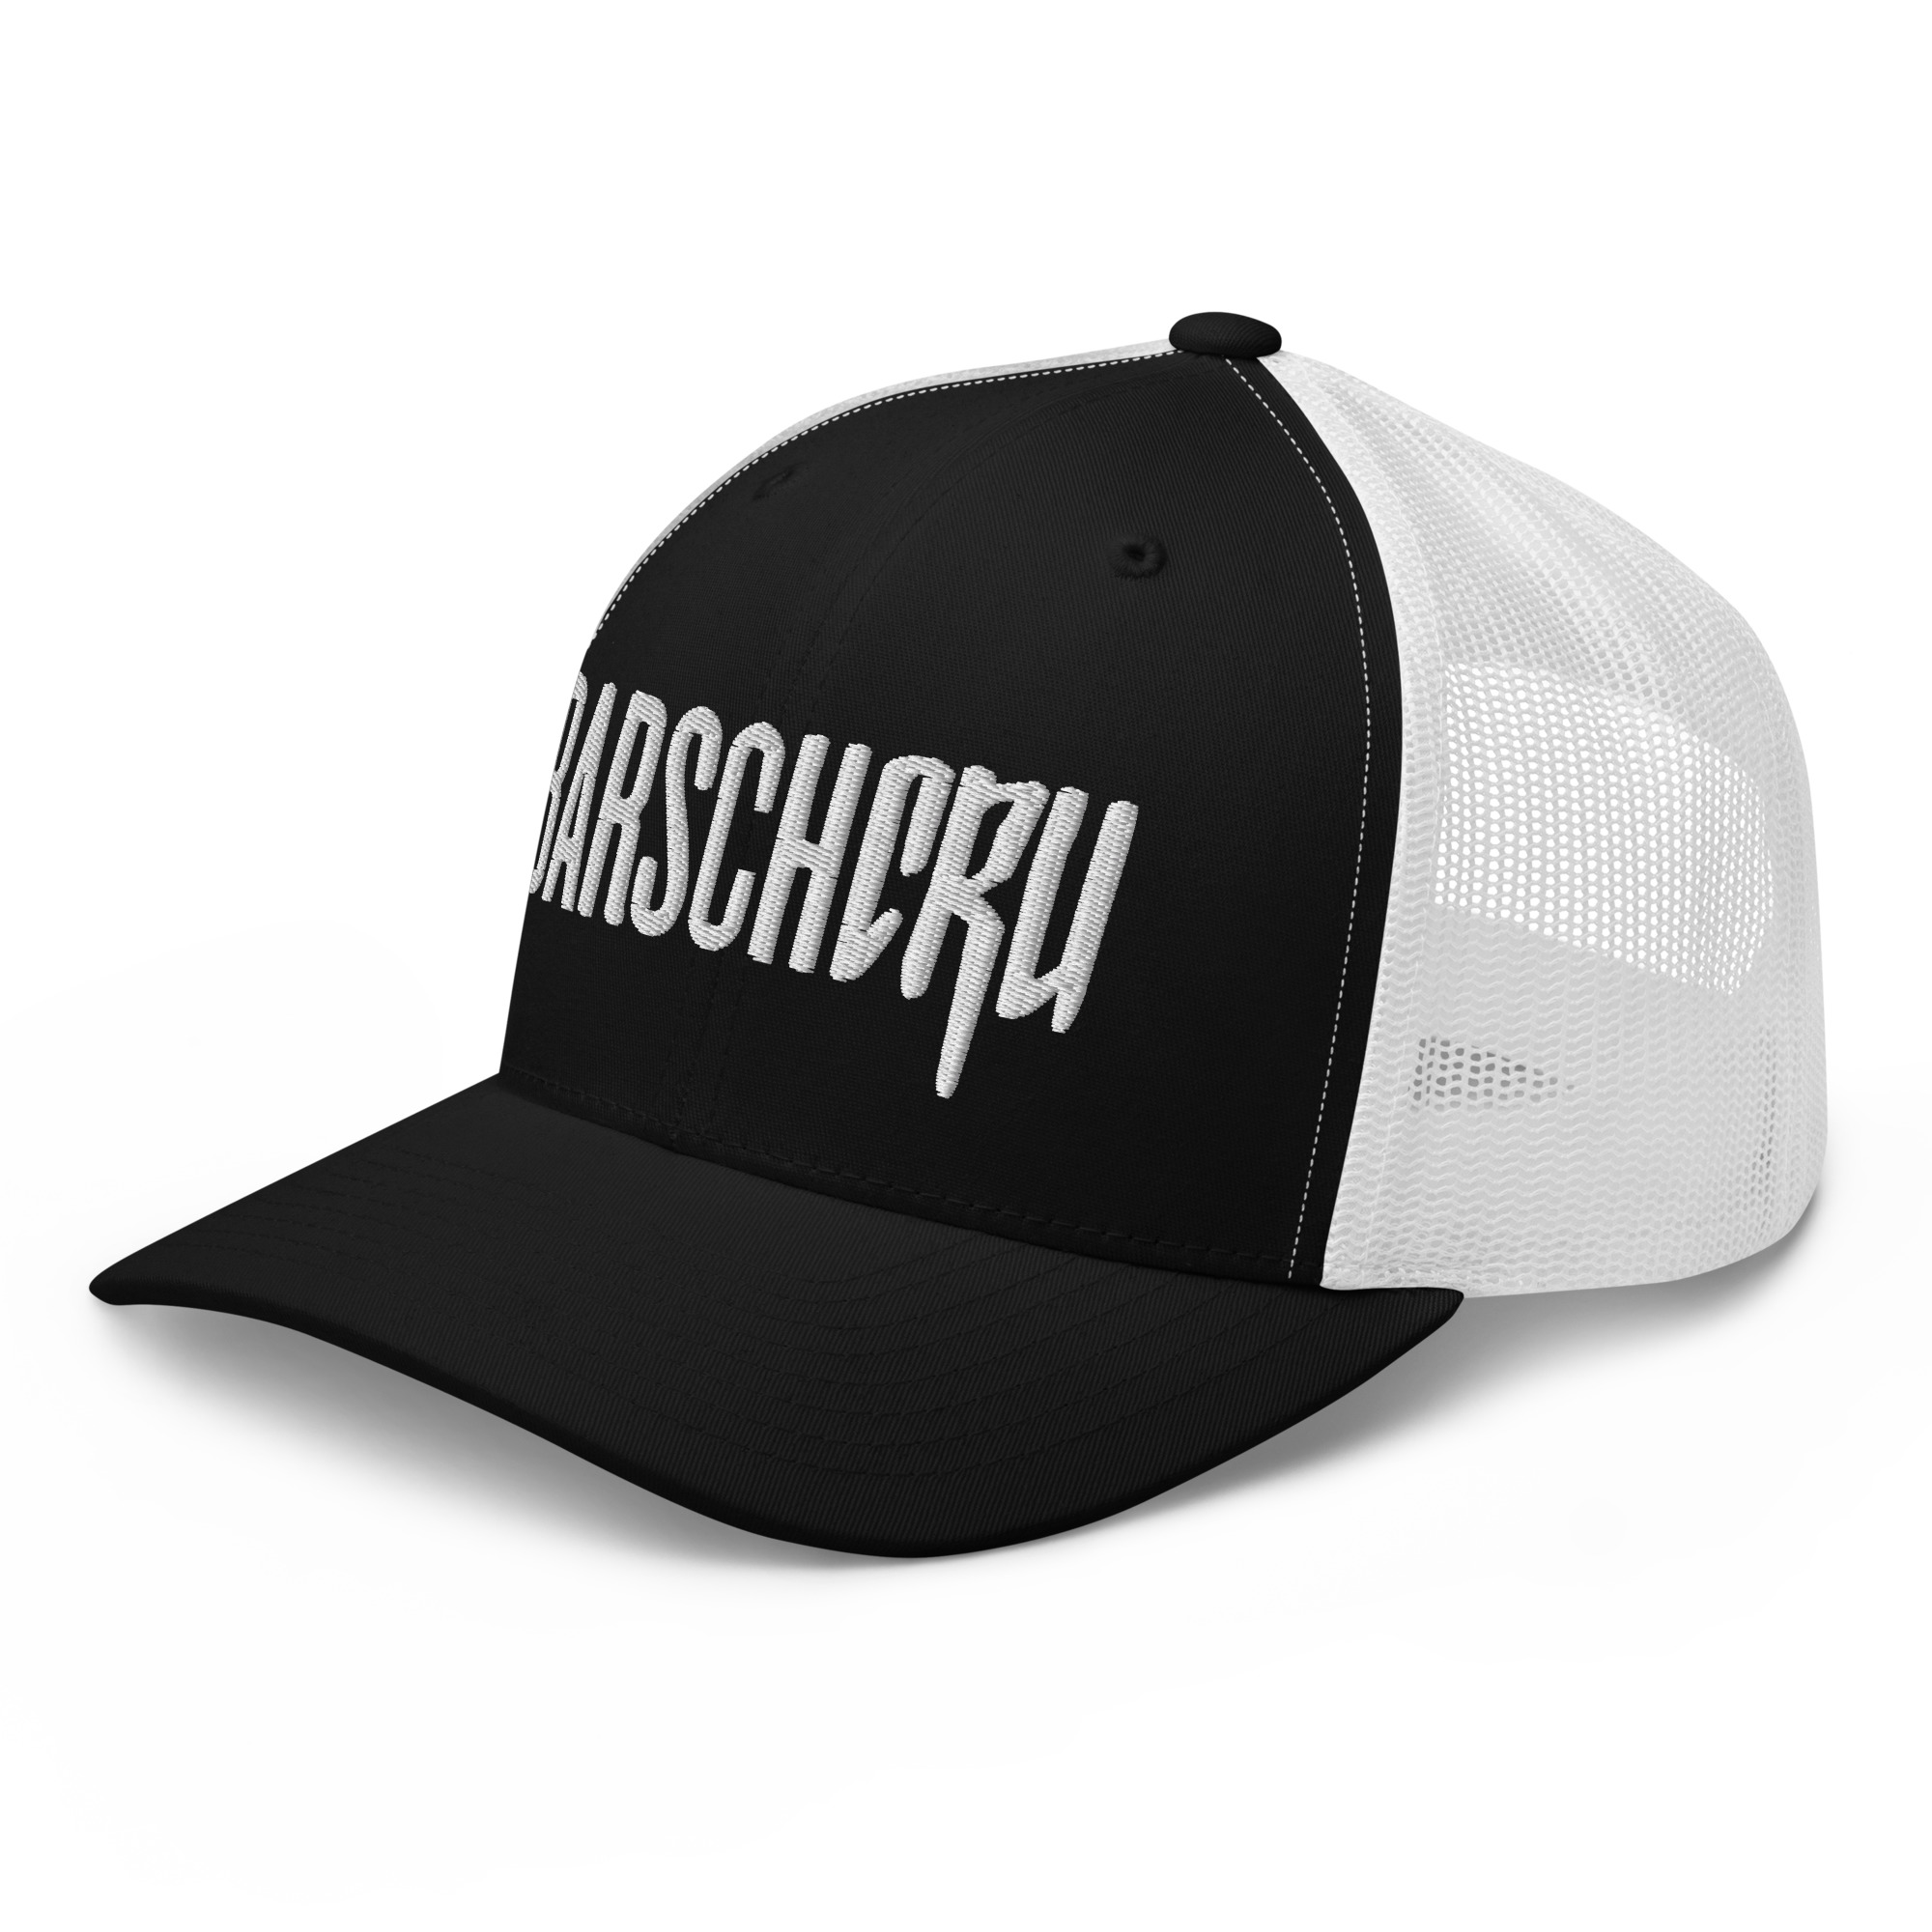 BARSCHCRU Trucker-Cap